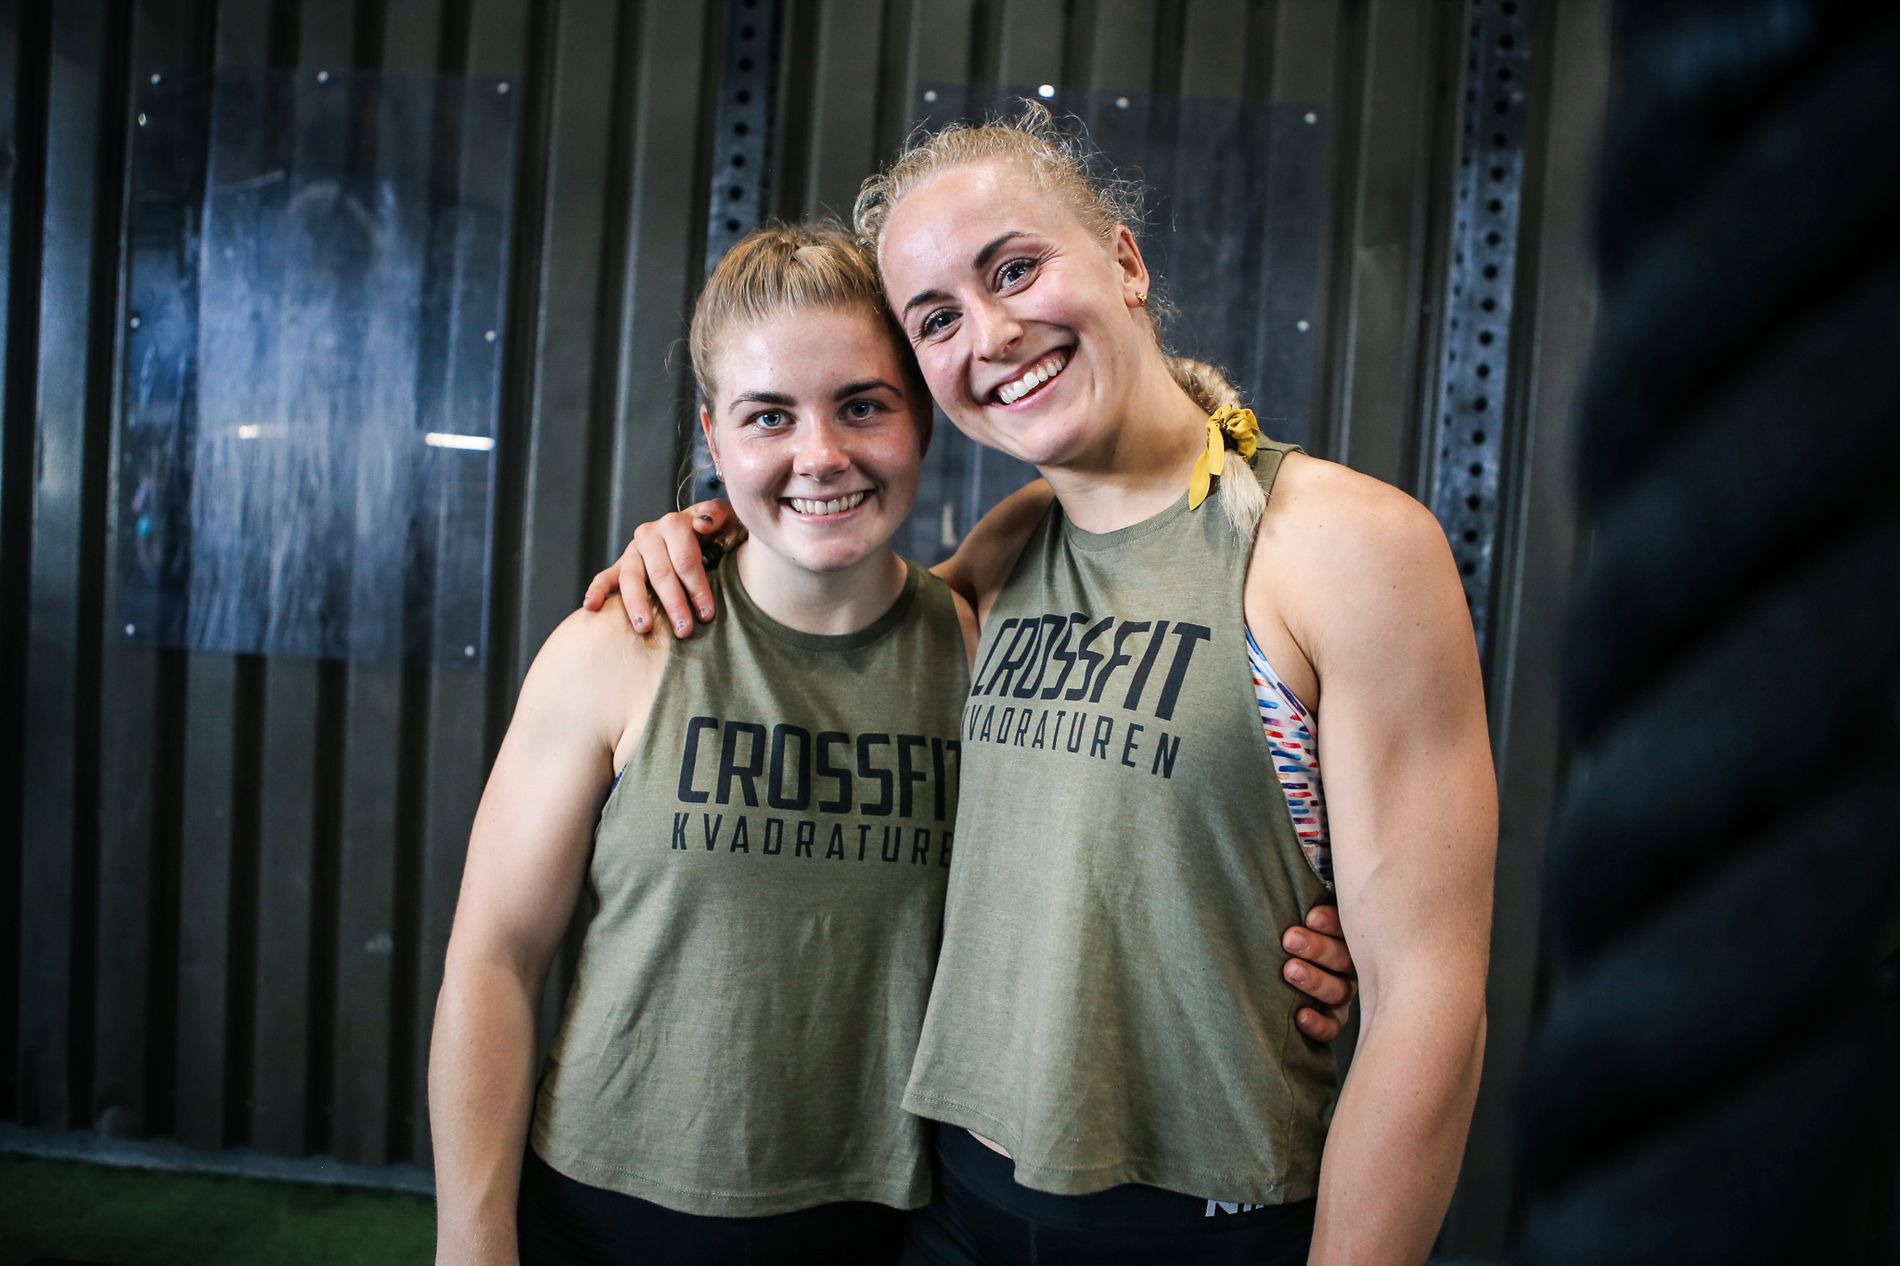 Veslemøy (22) har trent crossfit i over ett år hos Crossfit Kvadraturen, mens Charlotte (25) har nå syv år med hard trening bak seg. I august står verdensmesterskap i Sverige på planen.